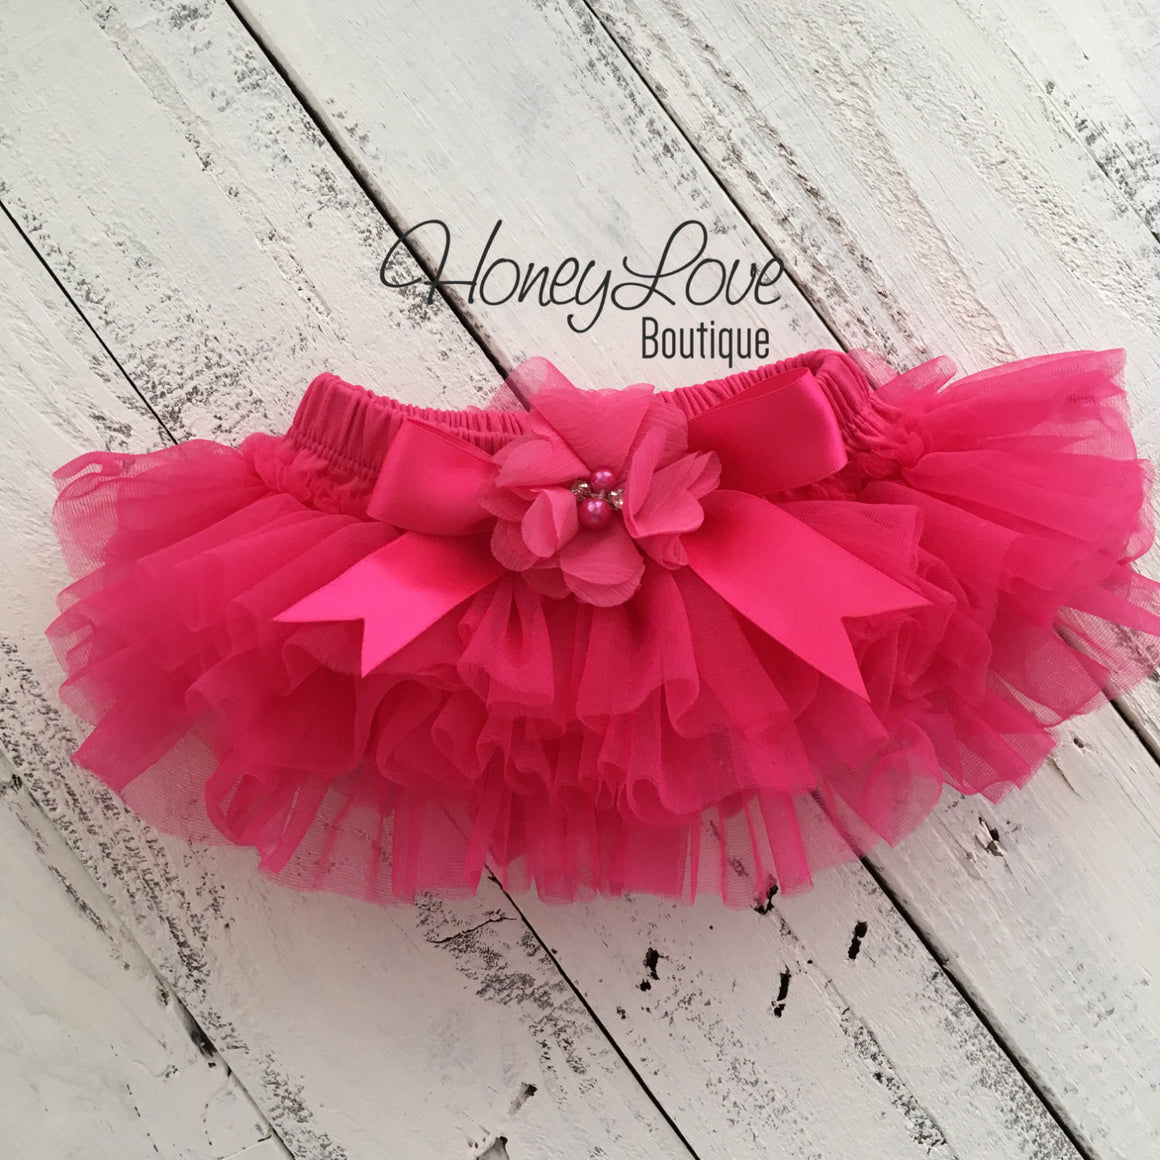 Watermelon Pink tutu skirt bloomers and silver glitter headband - embellished bloomer - HoneyLoveBoutique